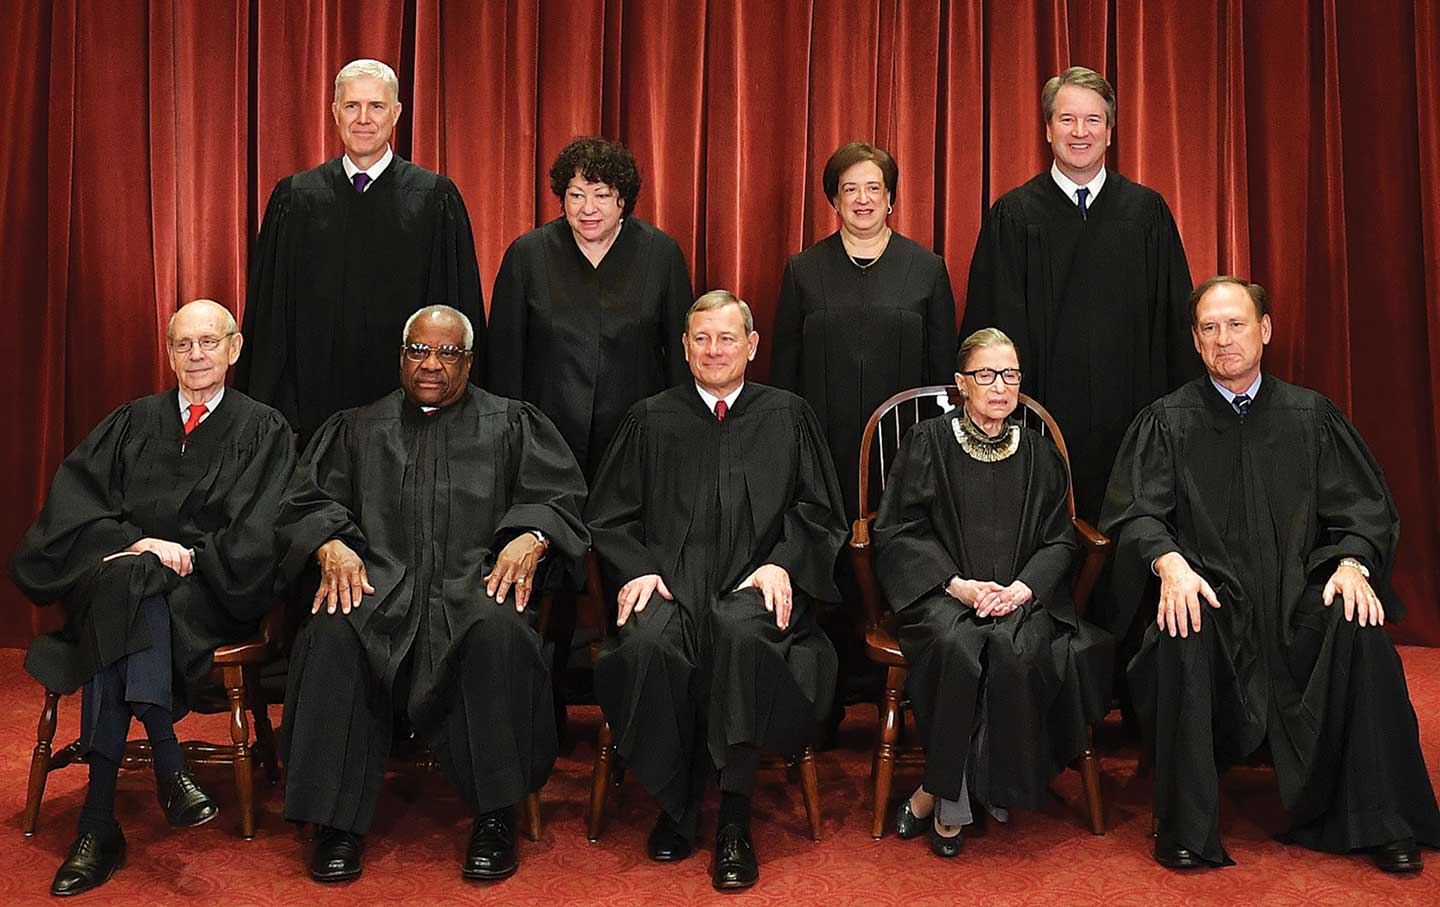 The Supreme Court’s War on Equality